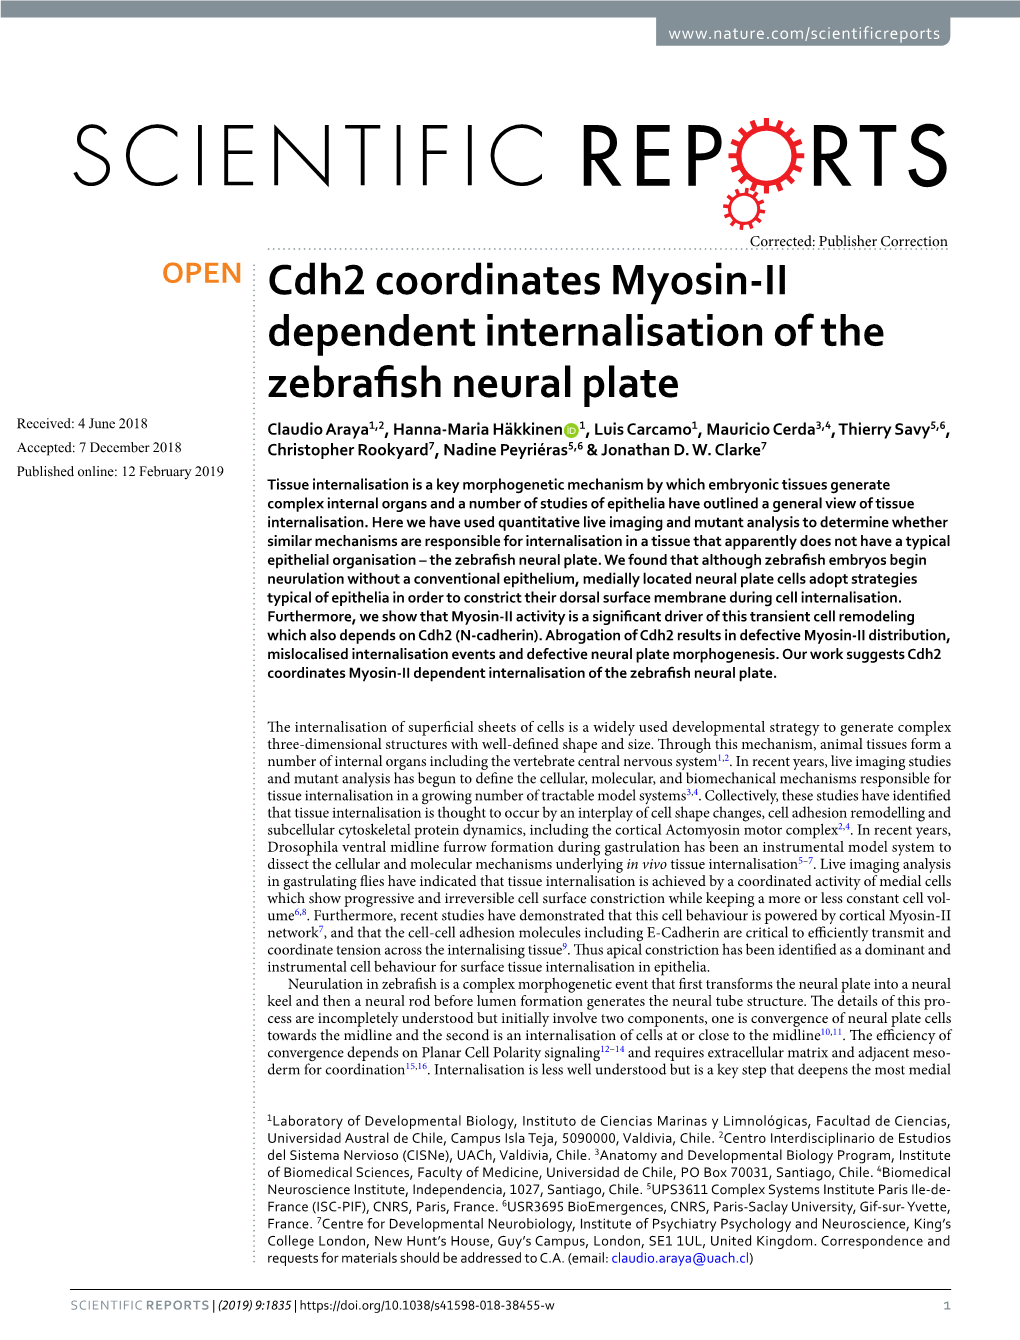 Cdh2 Coordinates Myosin-II Dependent Internalisation of the Zebrafish Neural Plate